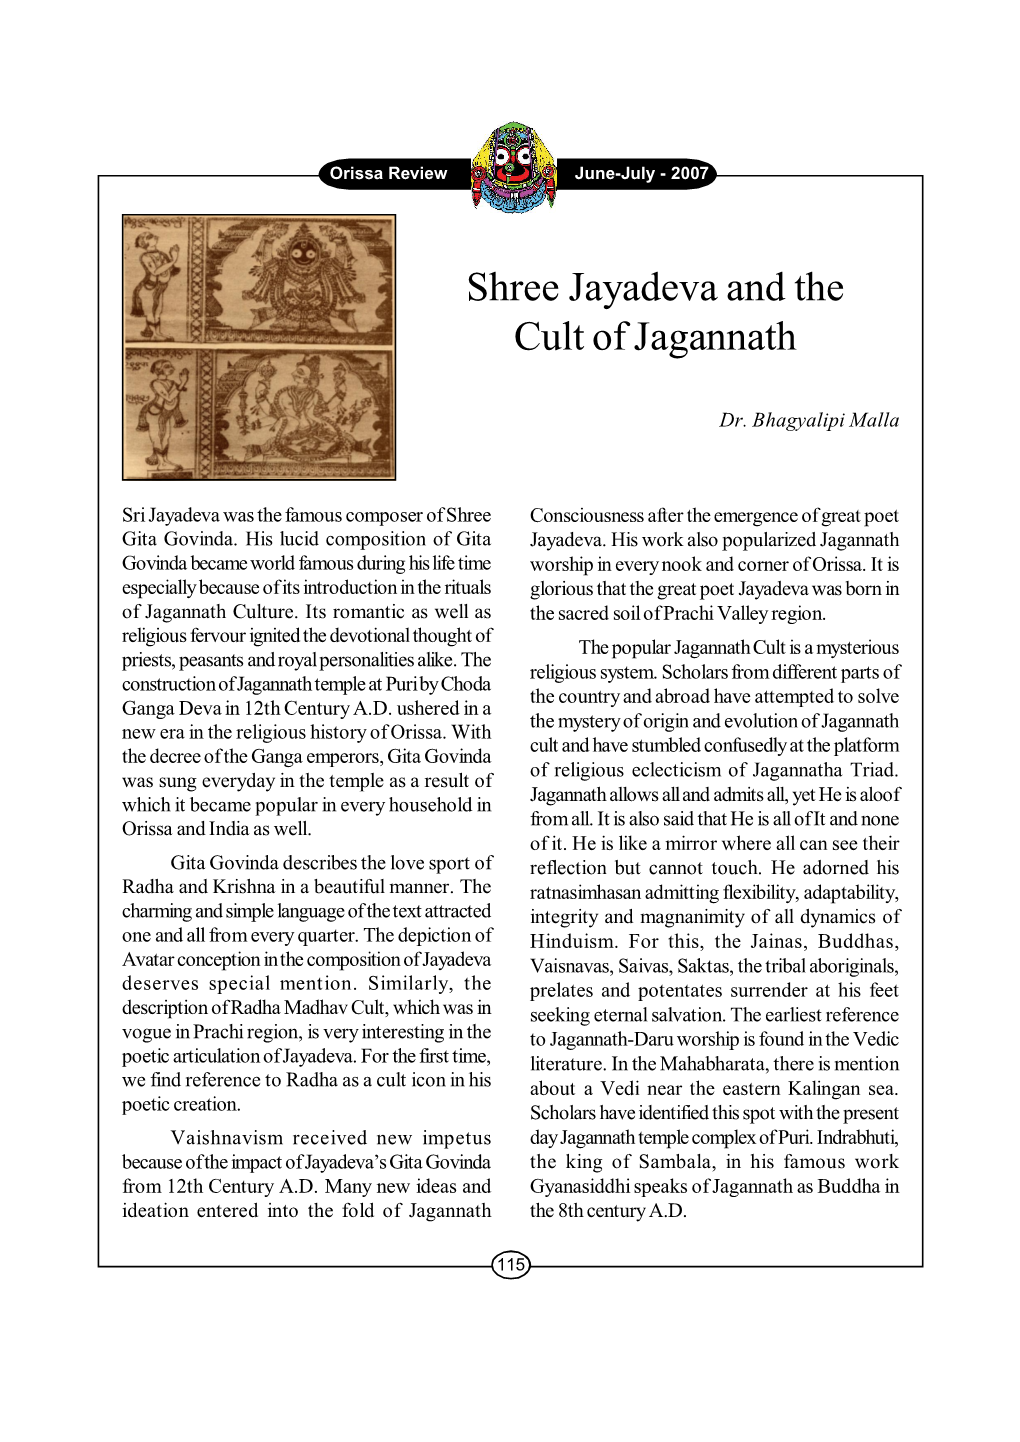 Shree Jayadeva and the Cult of Jagannath